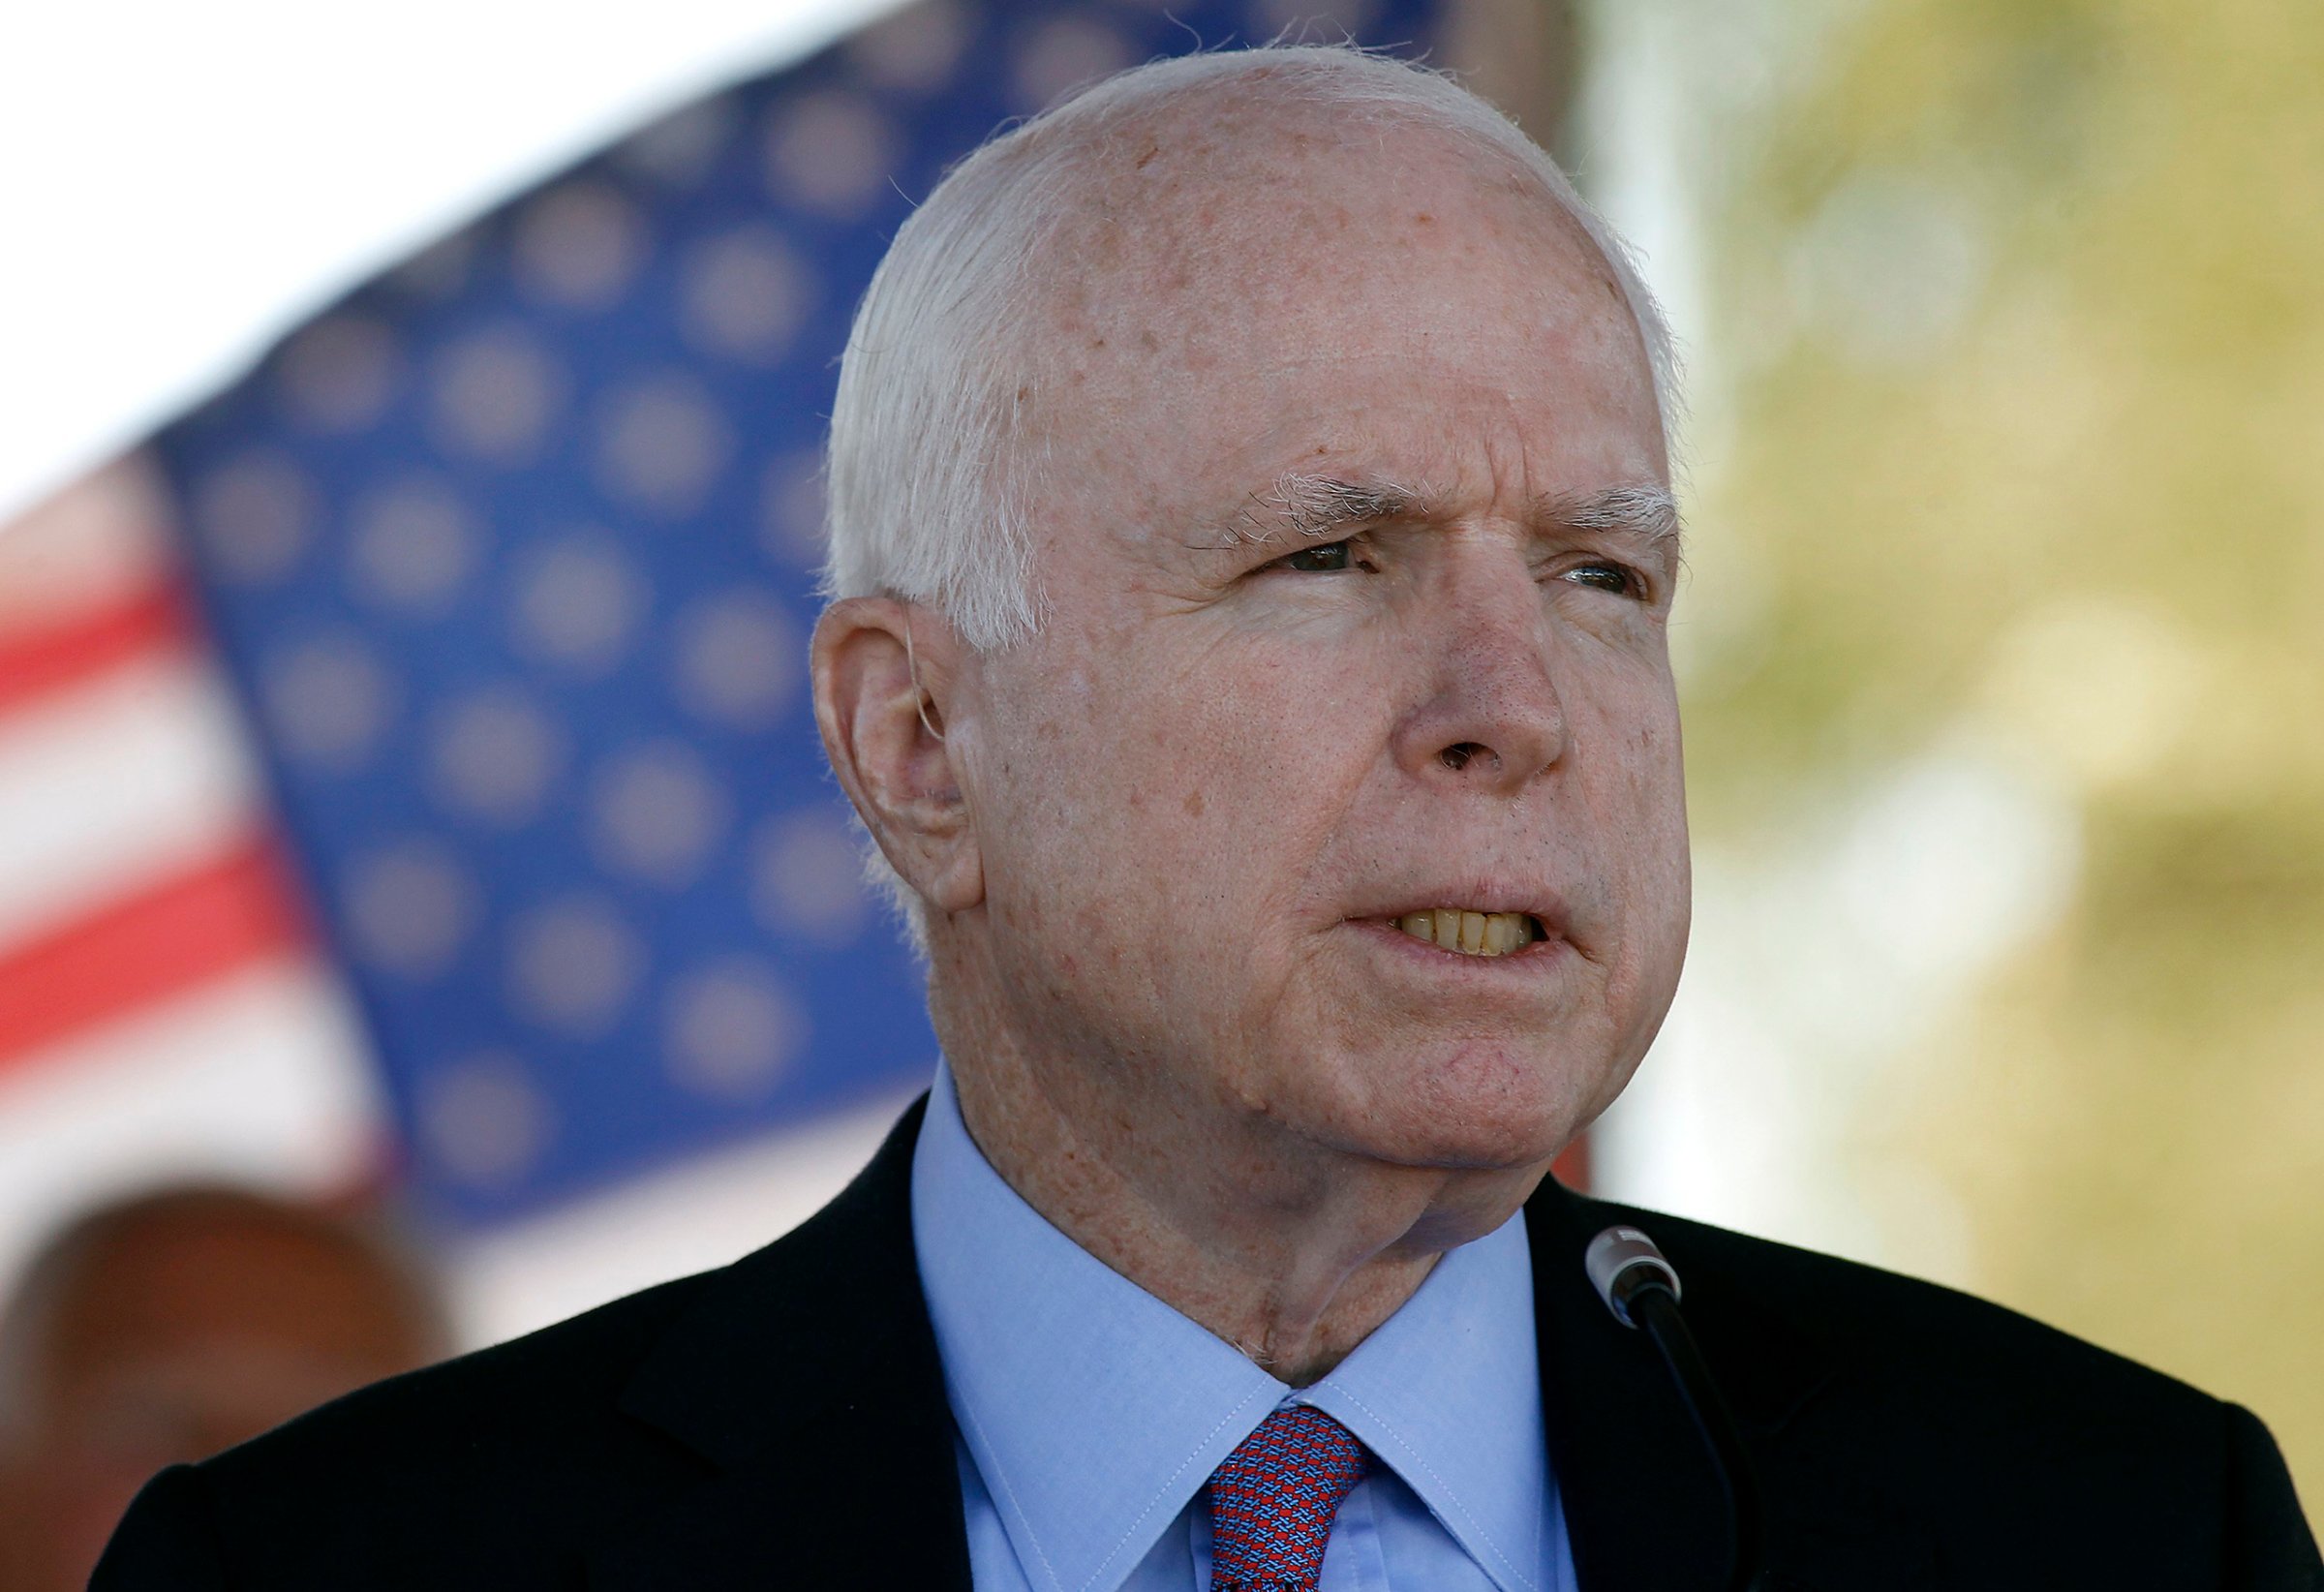 John McCain, R-Ariz, speaks during a Phoenix Memorial Day Ceremony at the National Memorial Cemetery of Arizona in Phoenix, May 30, 2016.